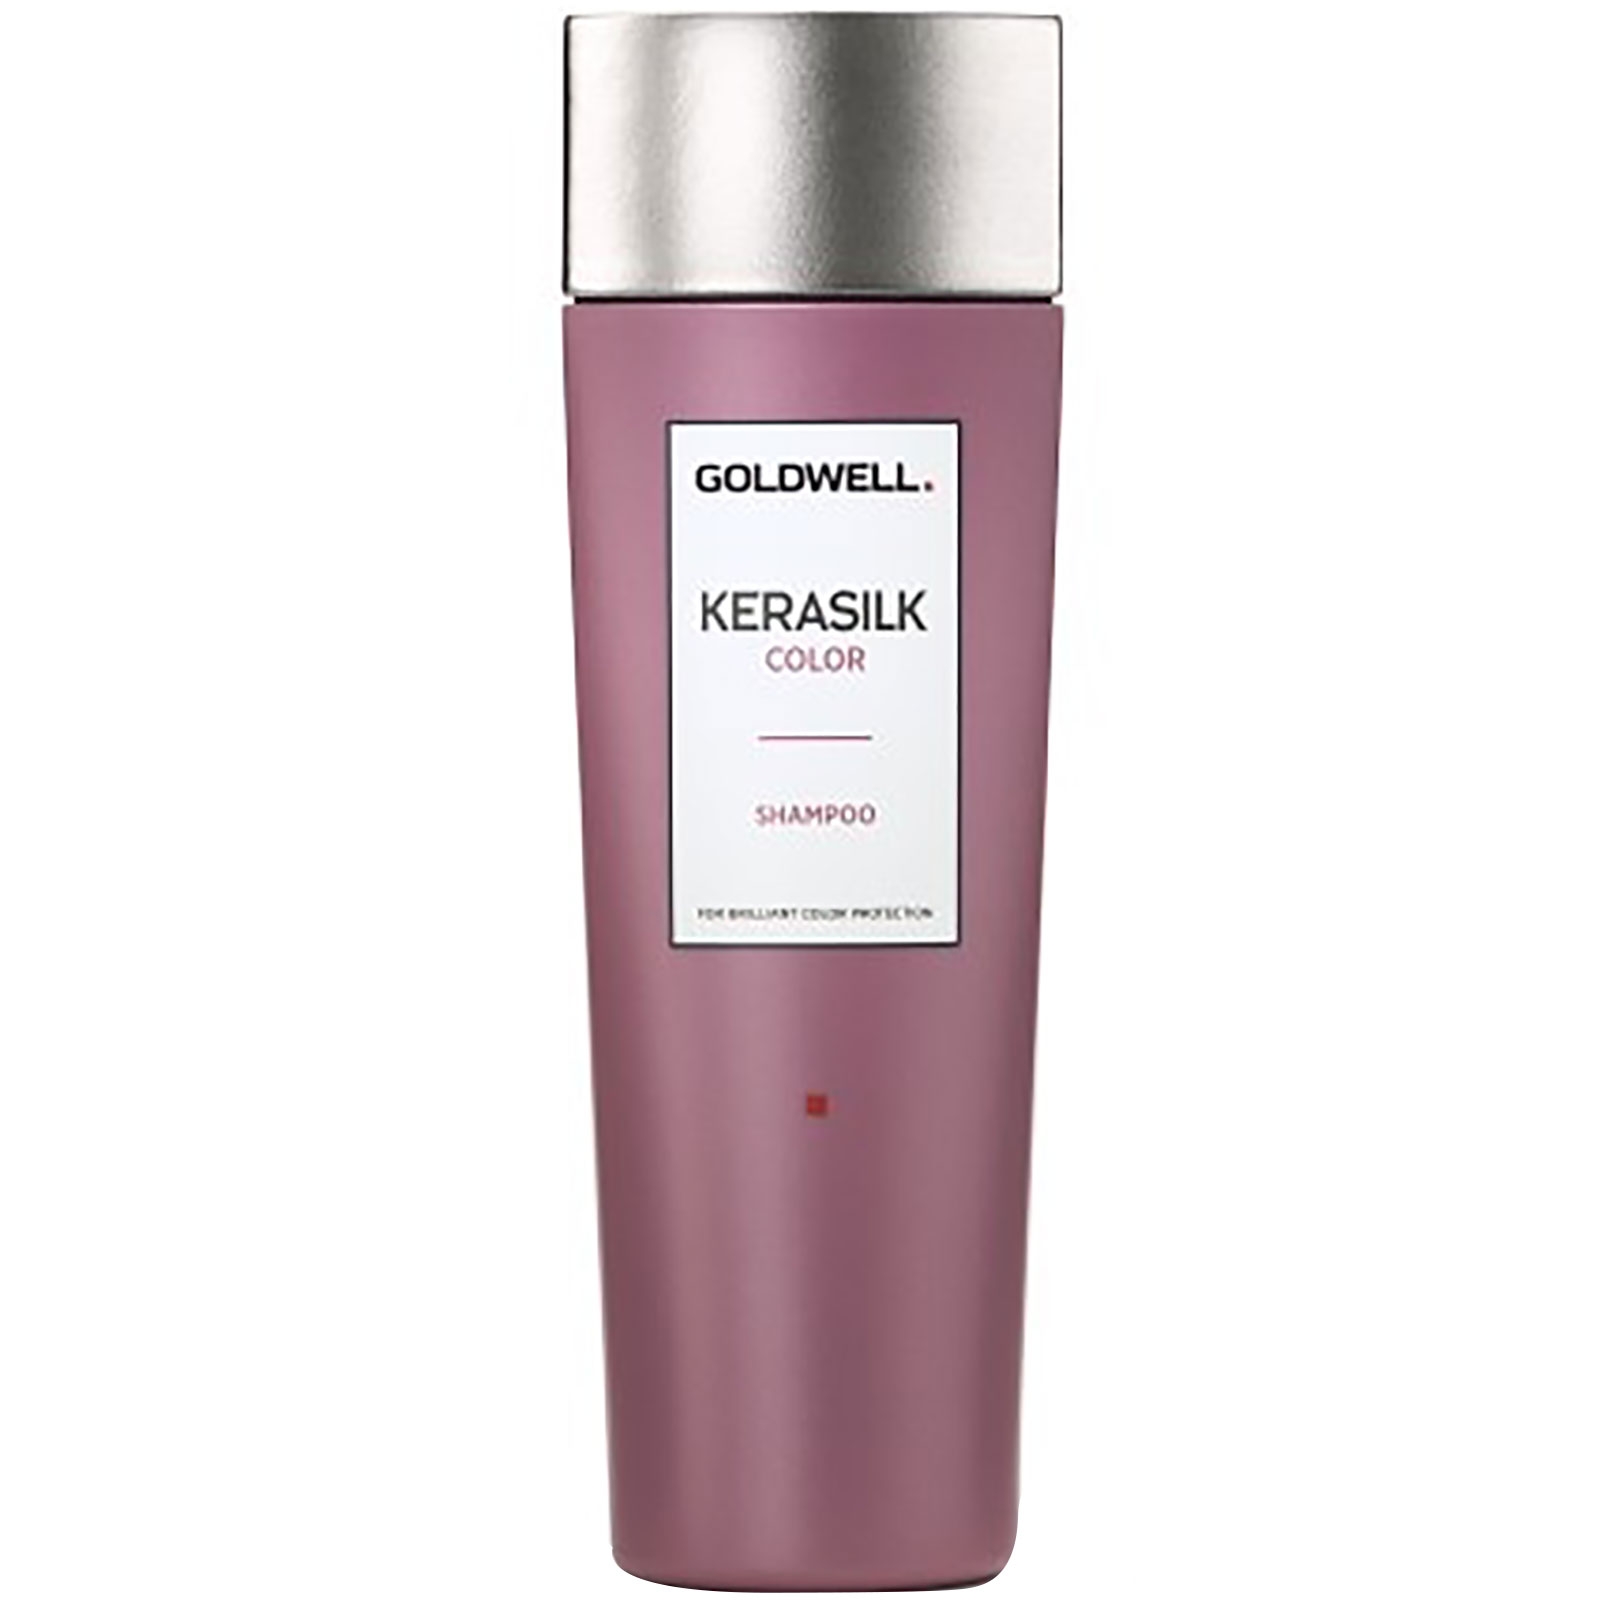 Goldwell - Kerasilk - Color - Gentle Shampoo - 250 ml